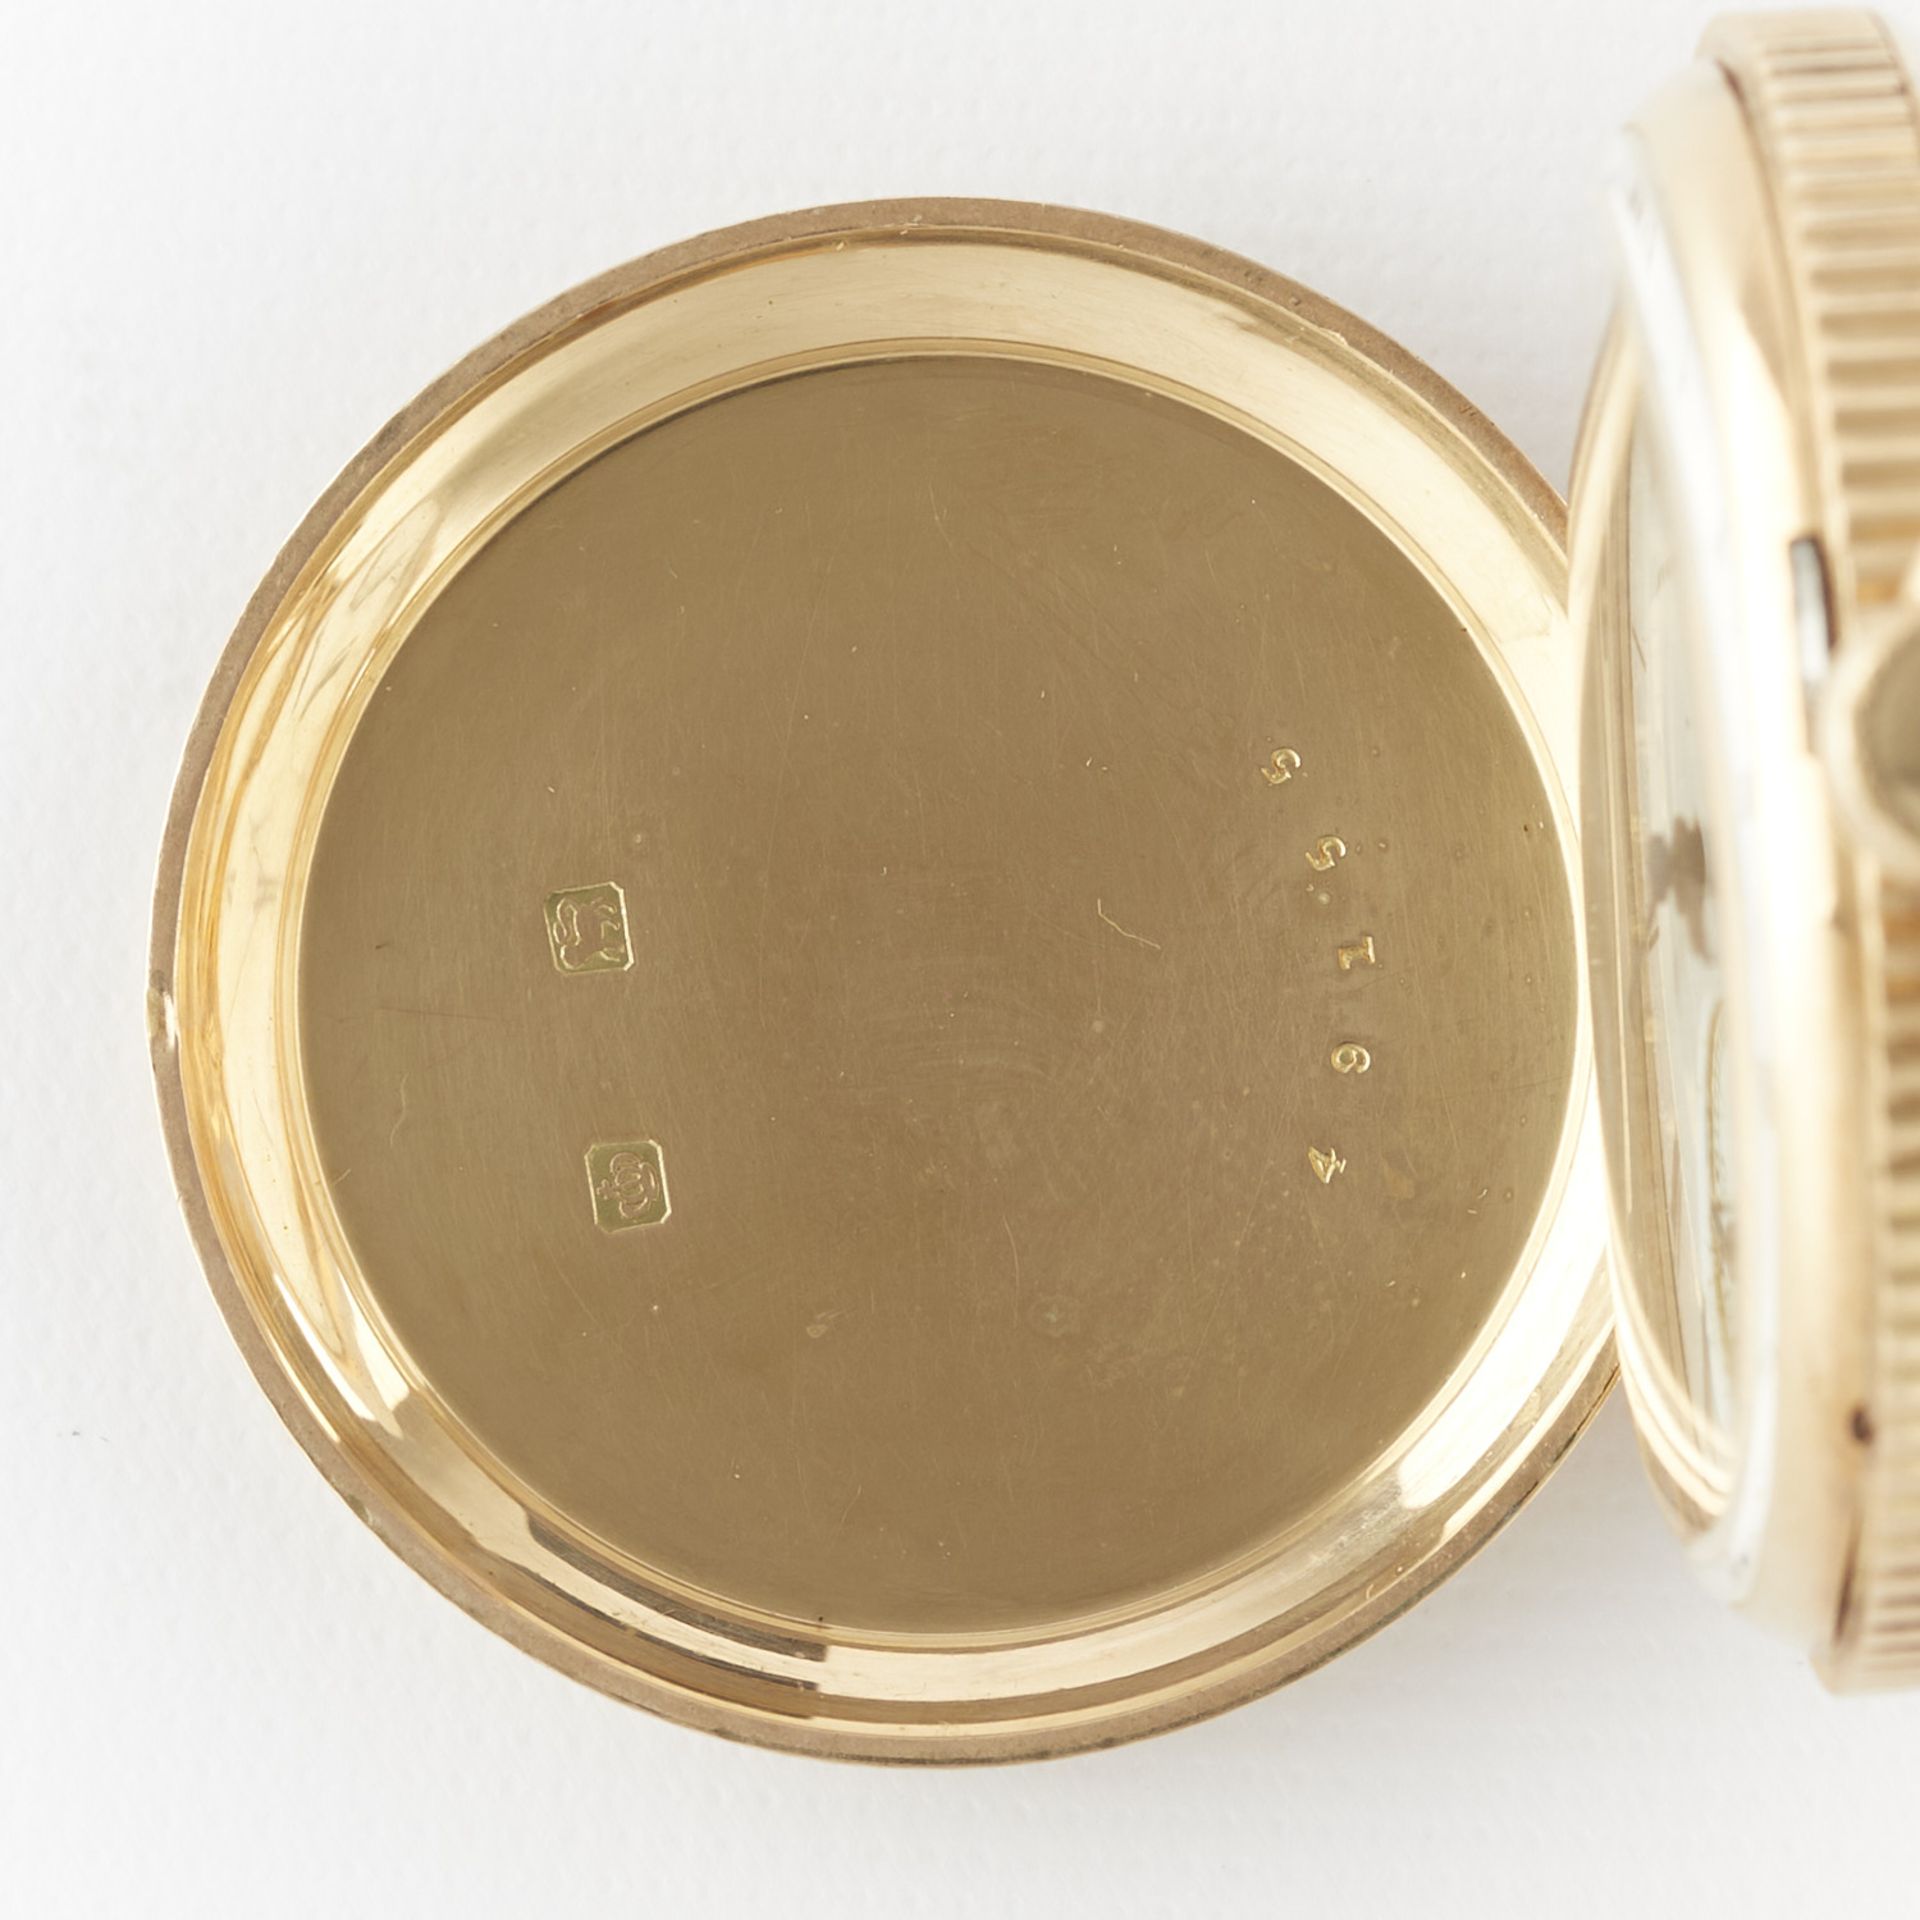 Am. Watch Co. William Ellery Pocket Watch - Image 4 of 8